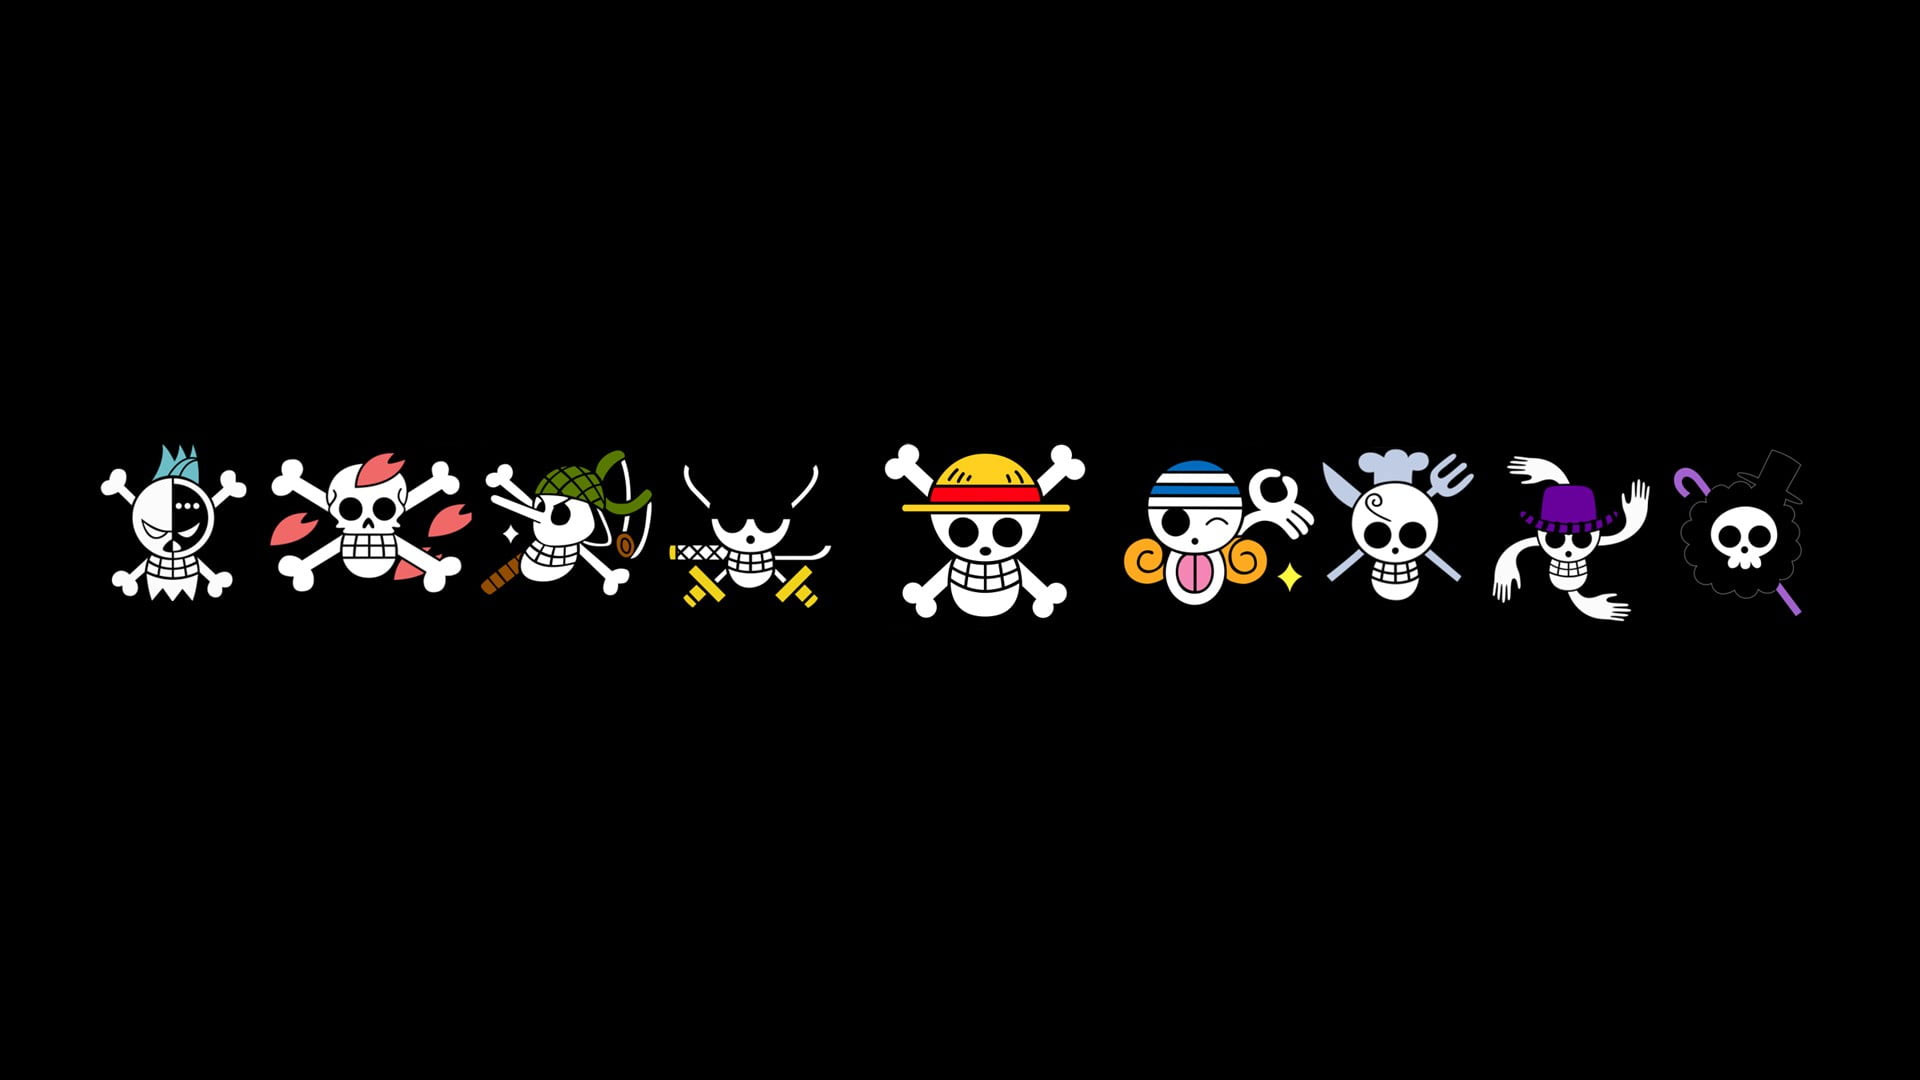 One Piece logo wallpaper, anime, skull, black background, copy space